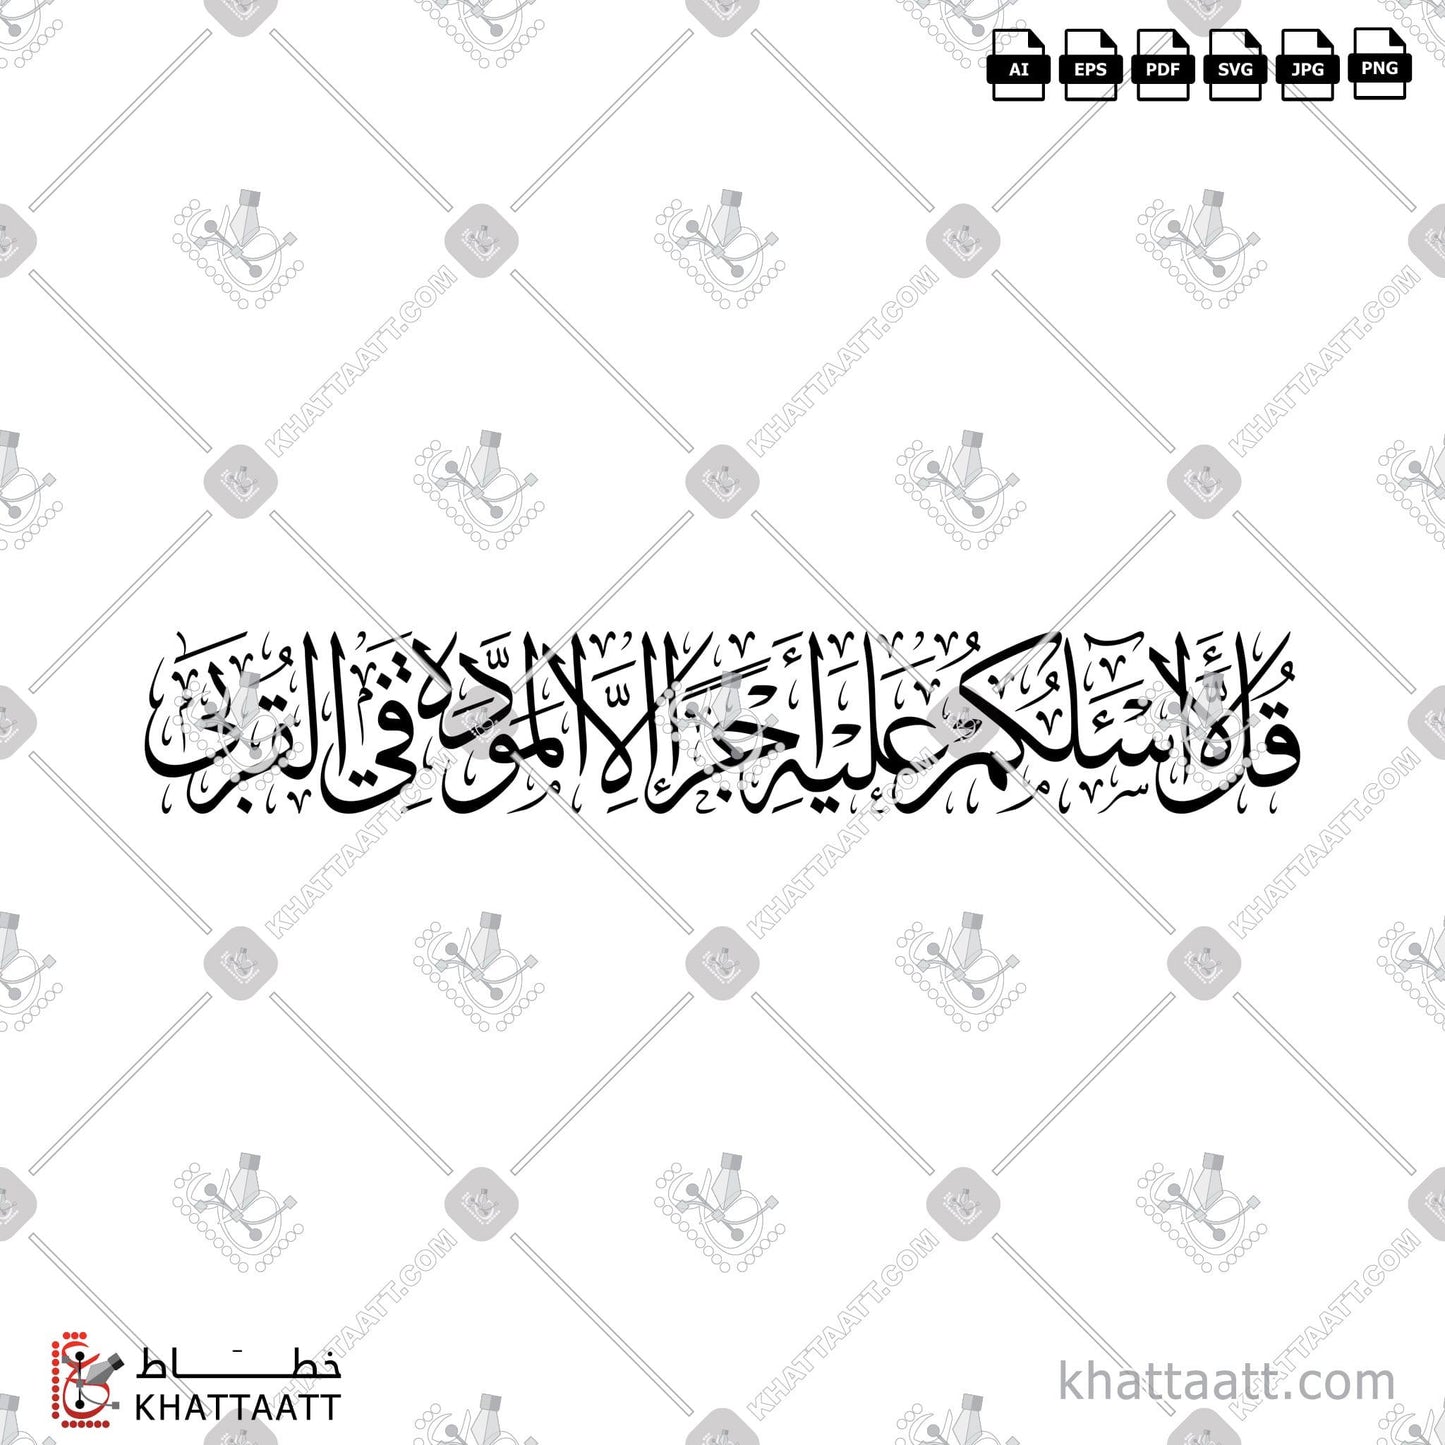 Download Arabic Calligraphy of قل لا أسألكم عليه أجرا إلا المودة في القربى in Thuluth - خط الثلث in vector and .png